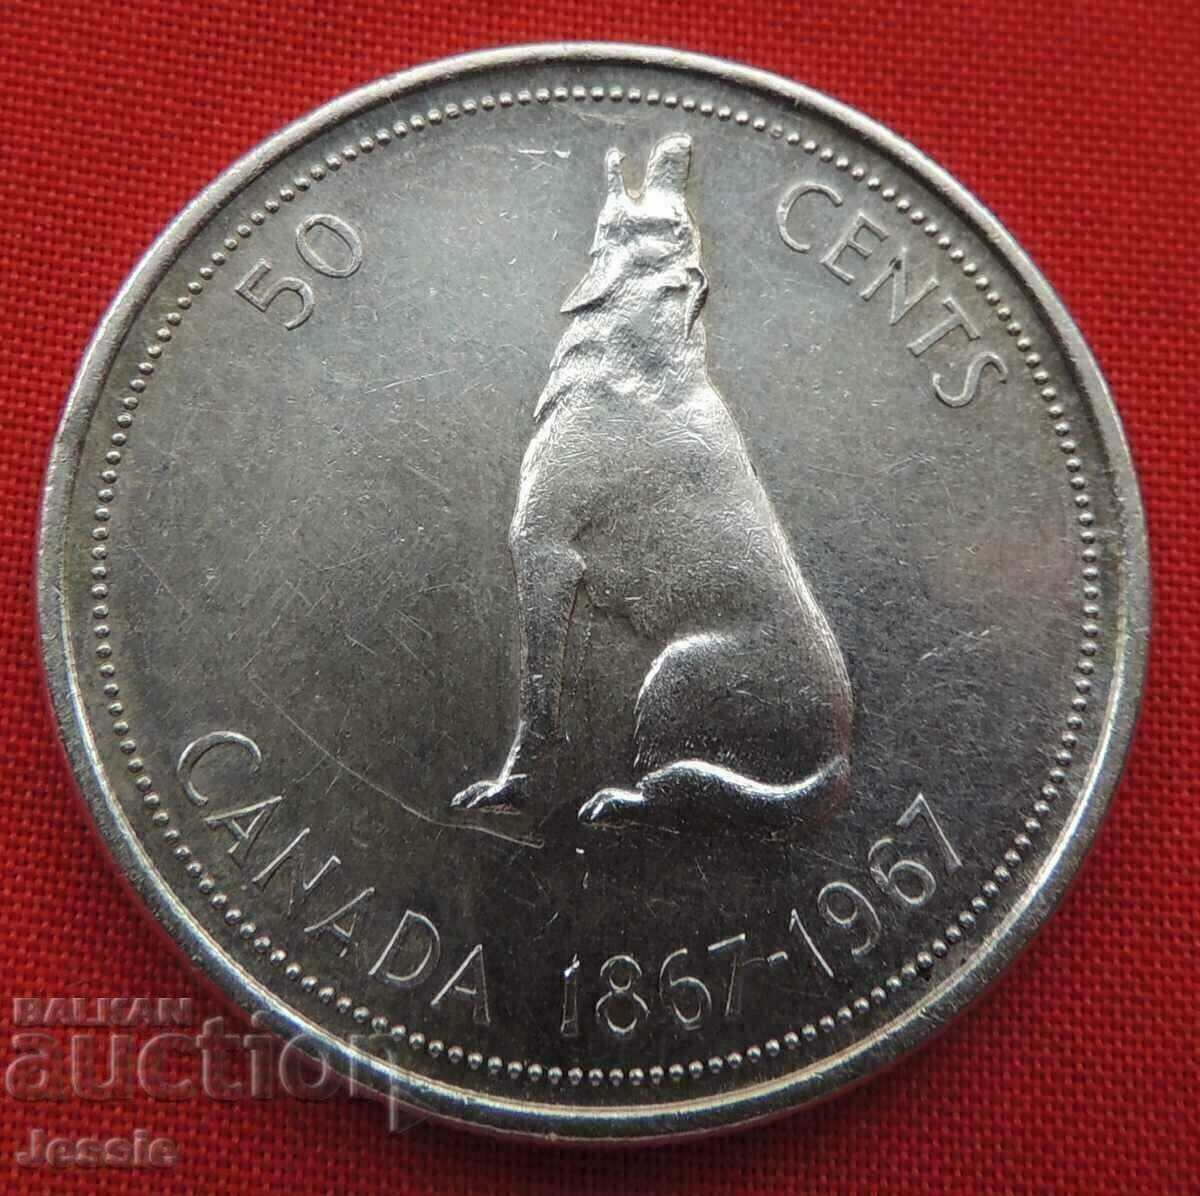 50 de cenți 1967 Canada